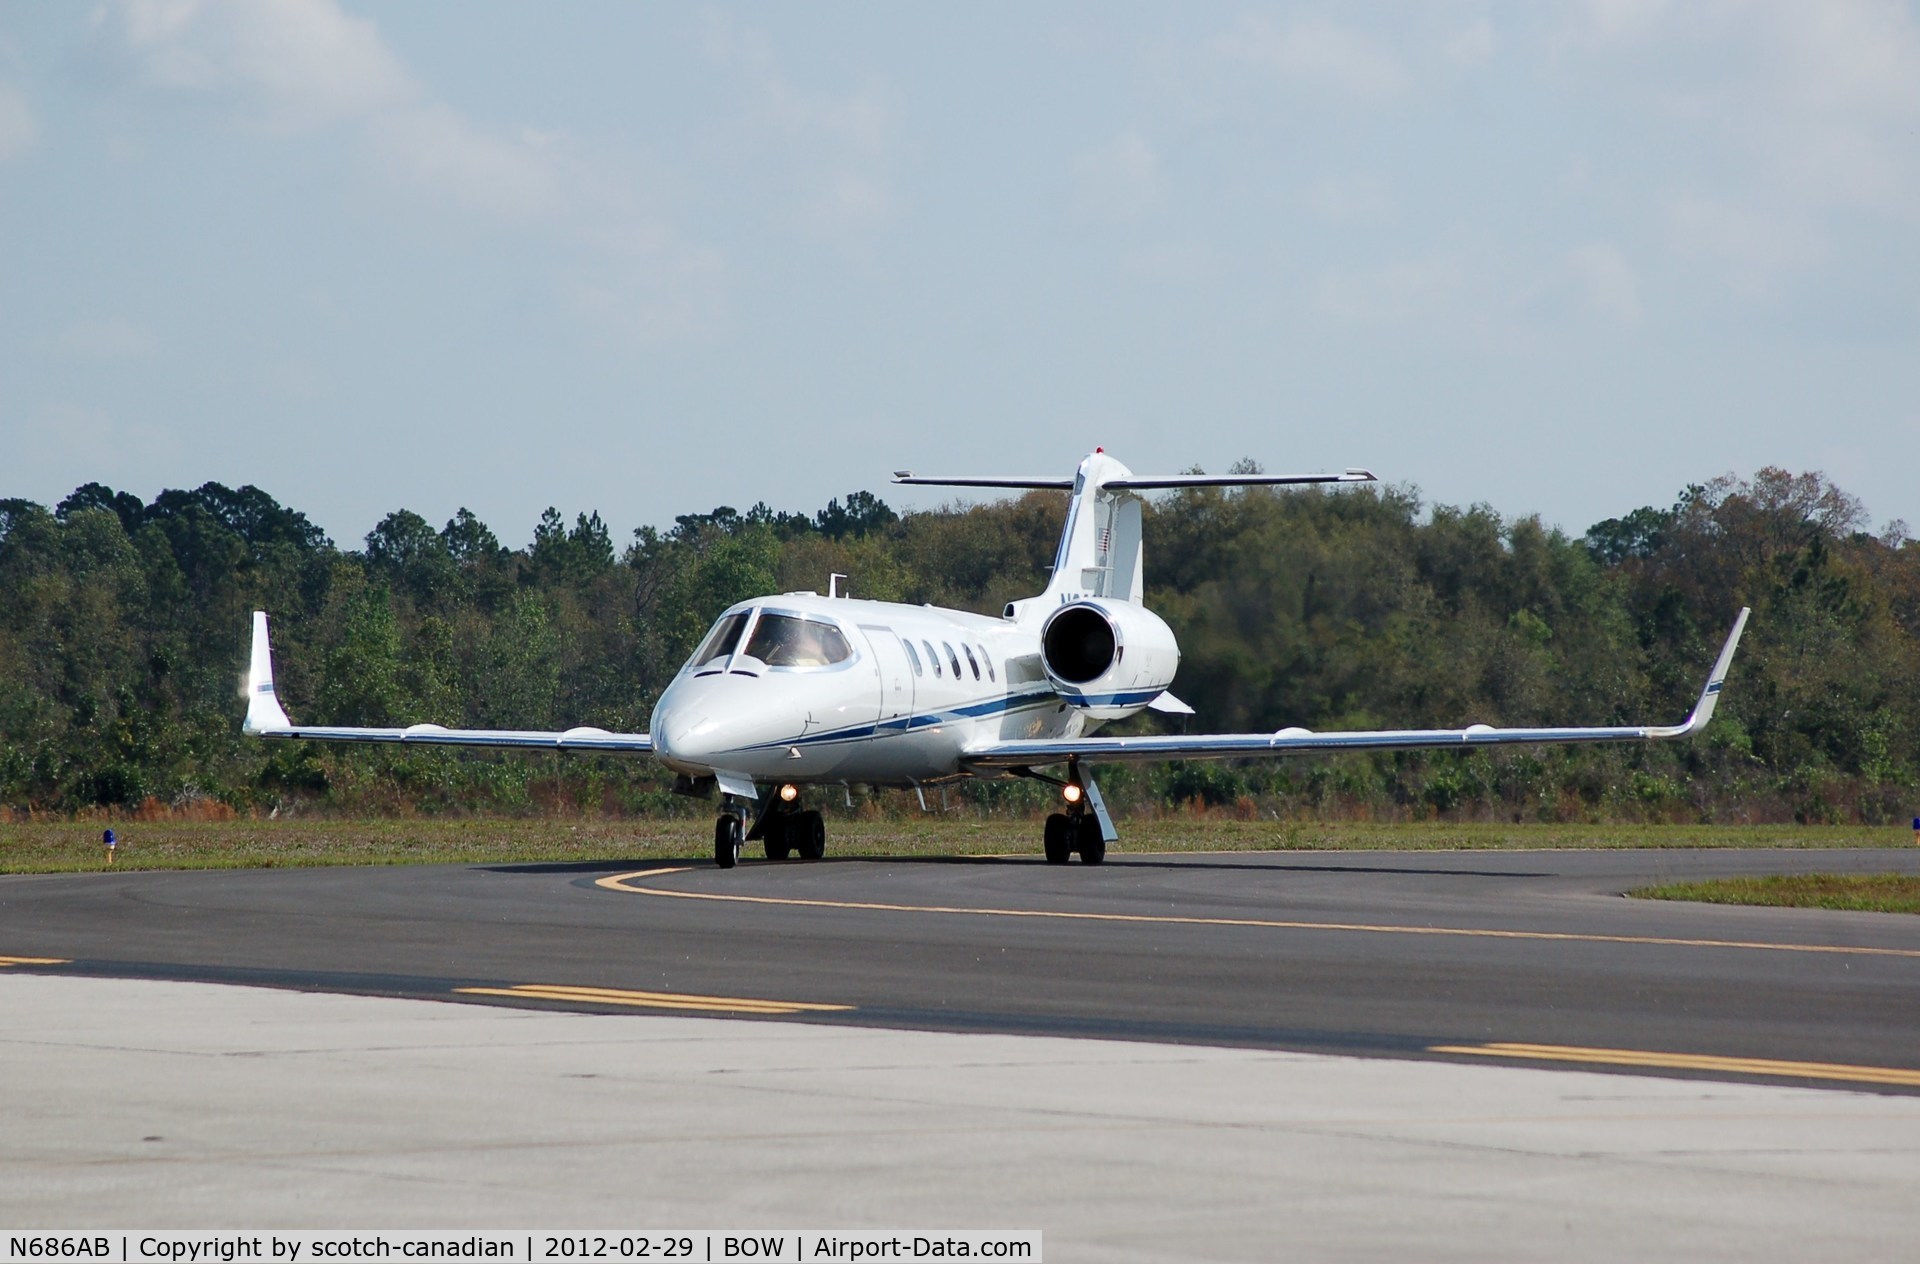 N686AB, 2002 Learjet Inc 31A C/N 239, 2002 Learjet Inc 31A N686AB at Bartow Municipal Airport, Bartow, FL